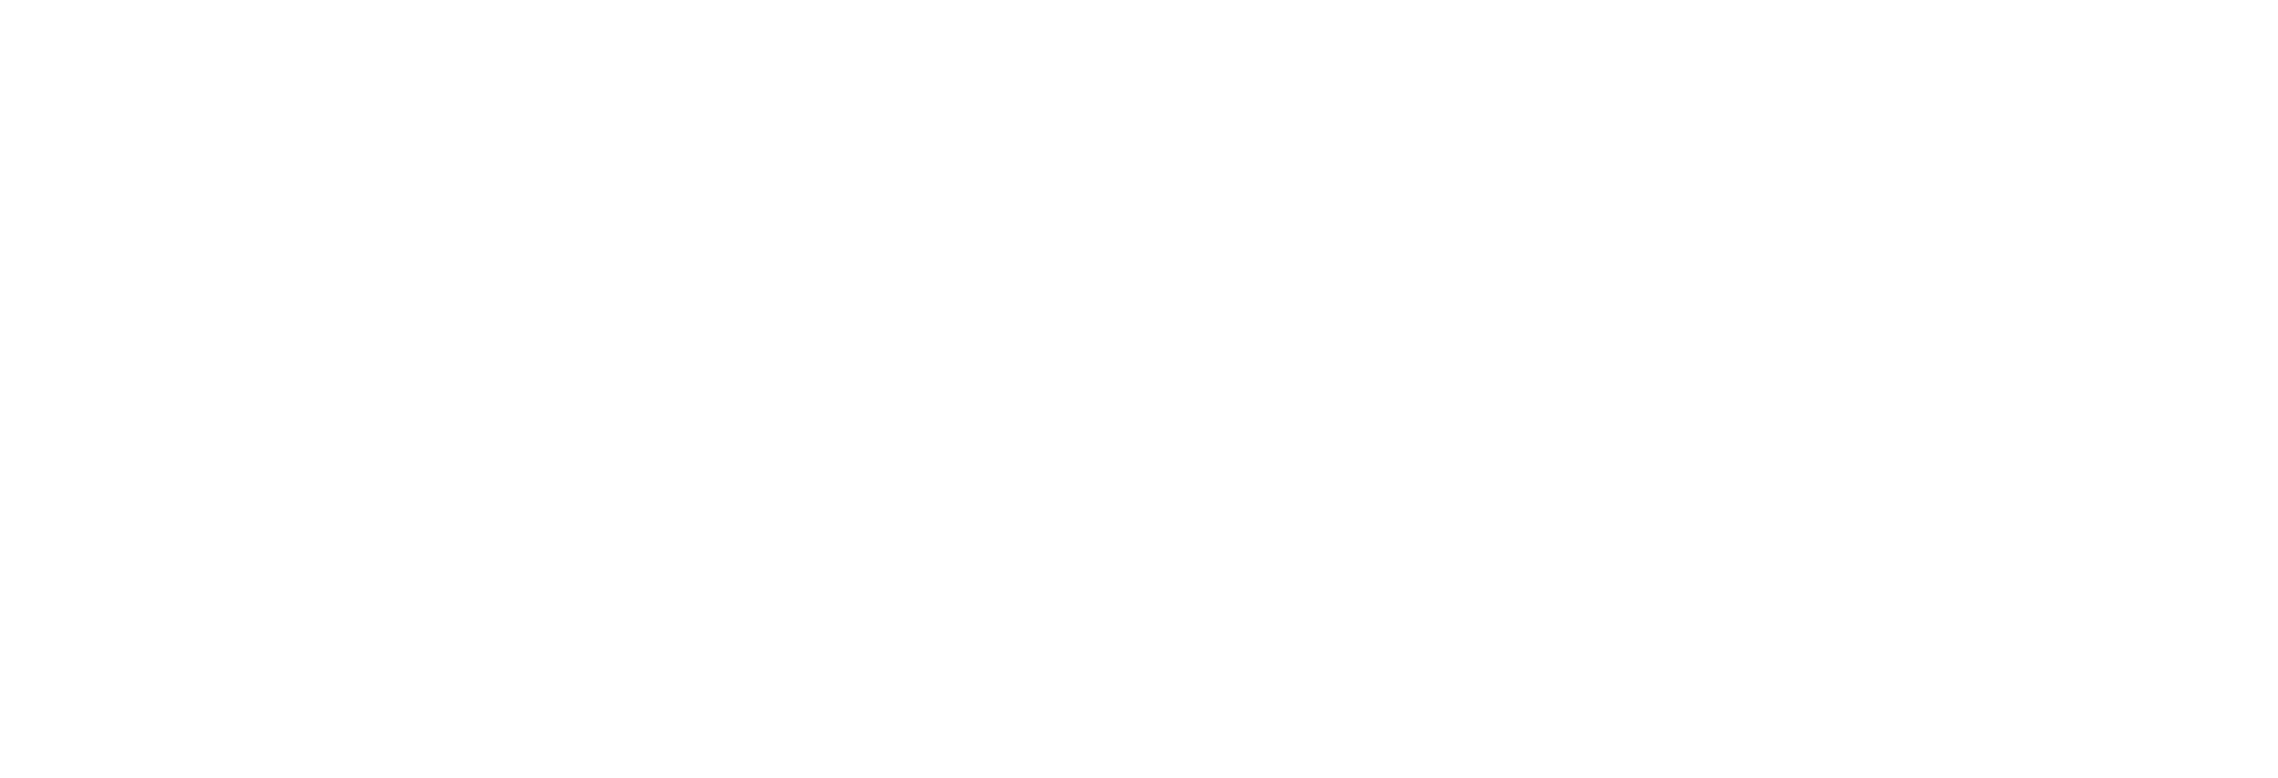 Published on behalf of Royal Botanic Garden Edinburgh